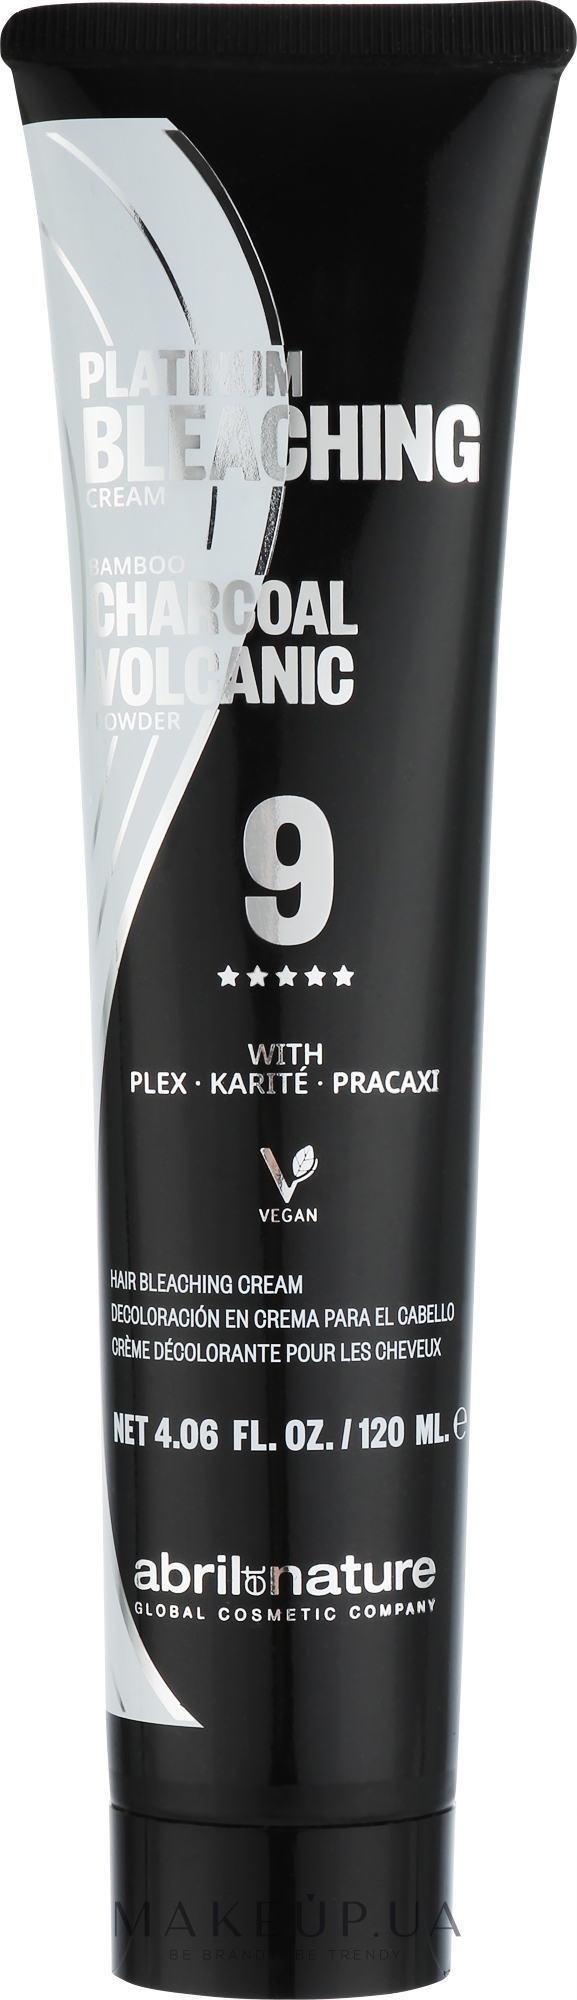 Осветляющий крем для волос - Abril et Nature Black Carbon Platinum Bleaching Cream — фото 120ml